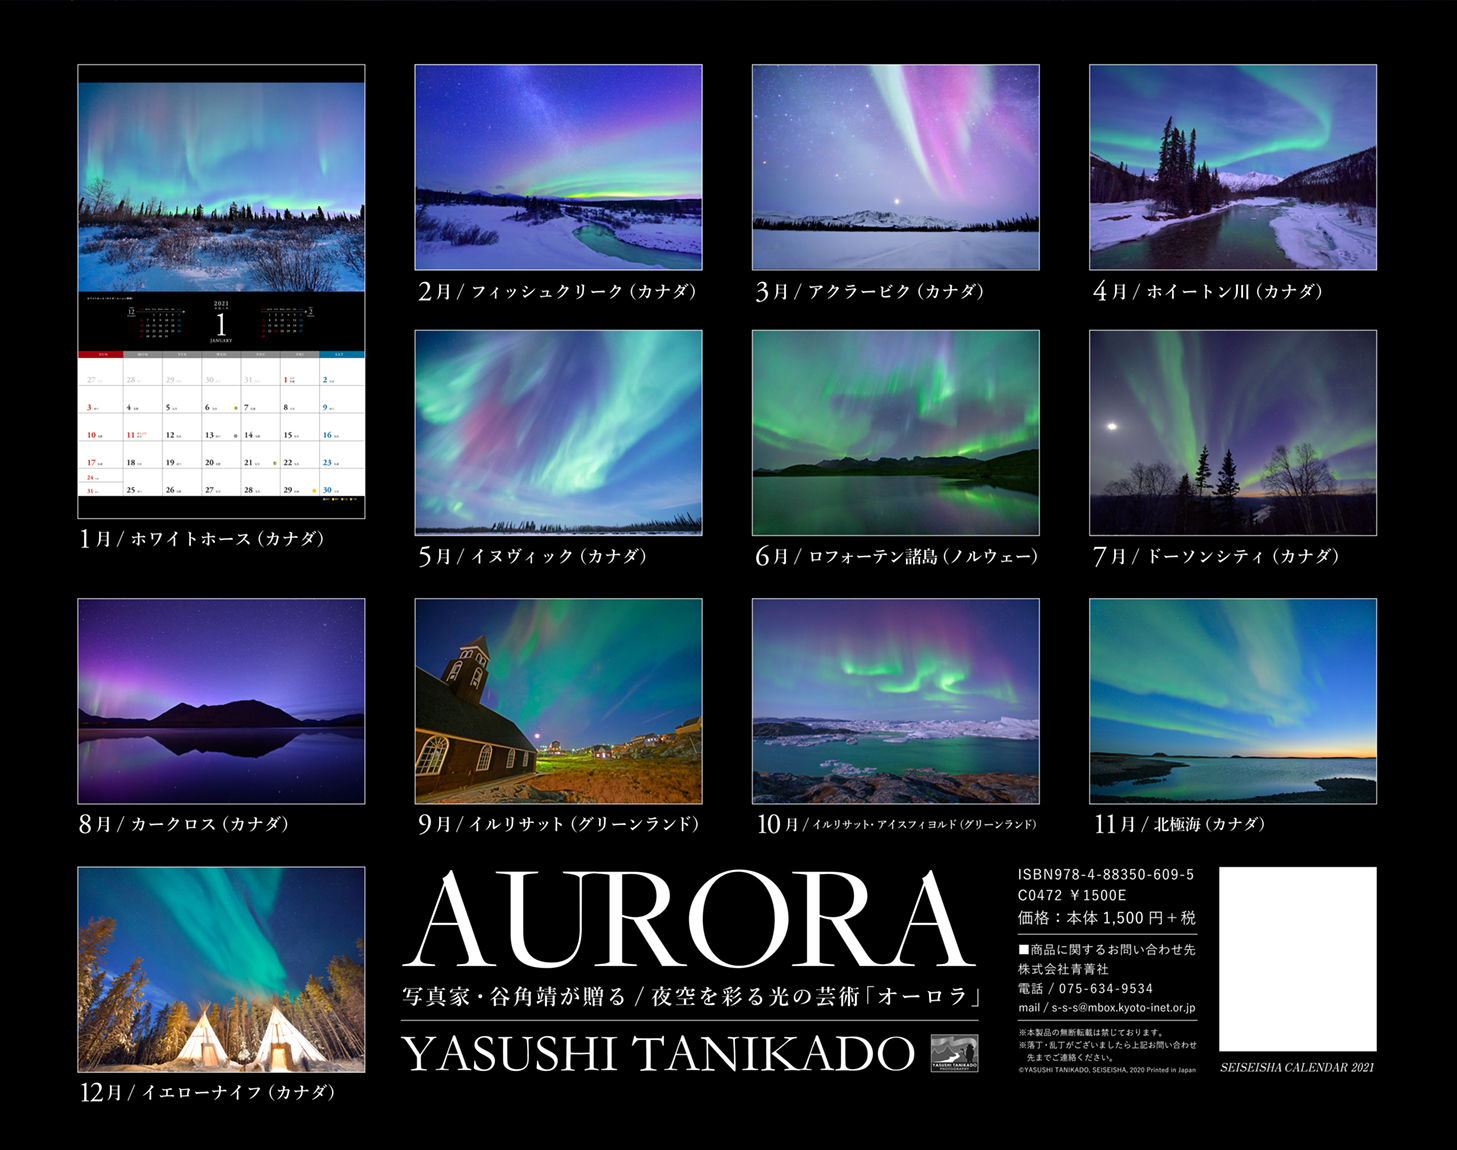 Auroraカレンダー 21 本 楽天ブックス